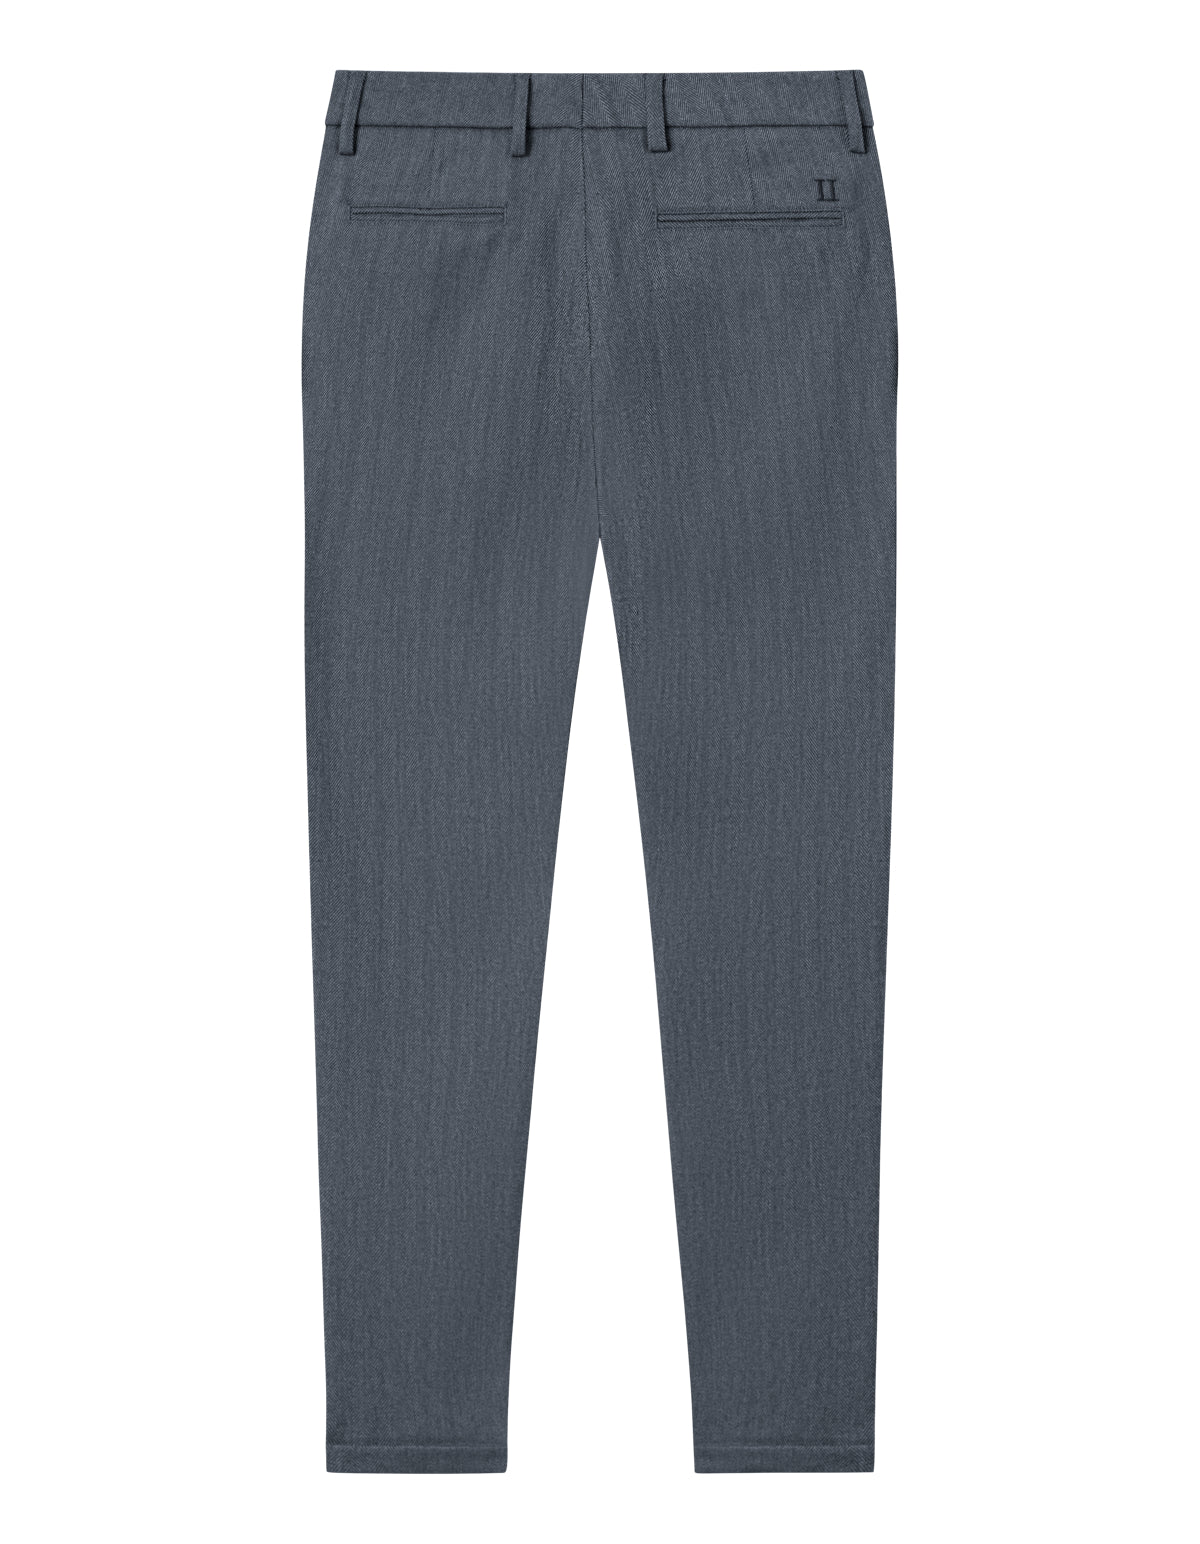 Como Reg Herringbone Suit Pants - Light Grey Melange/Charcoal